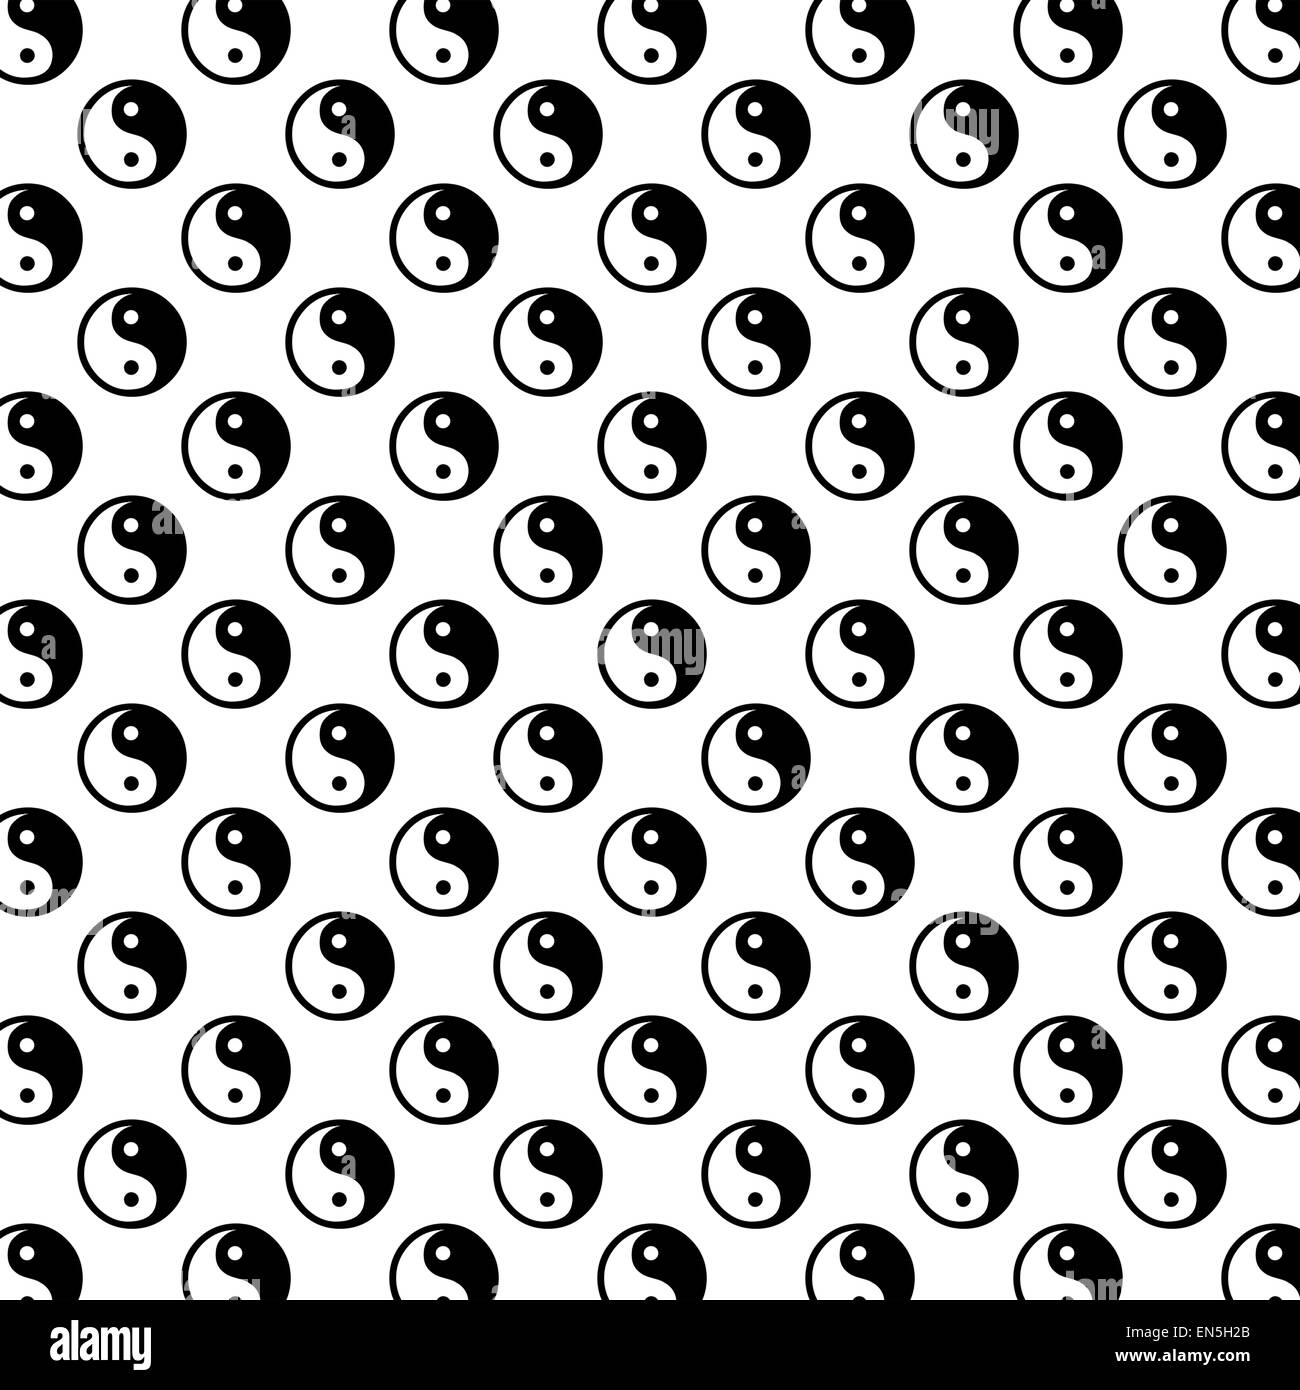 Yin Yang Black White Taoism Balance Chinese Tao Symbol Background Texture Pattern Stock Photo